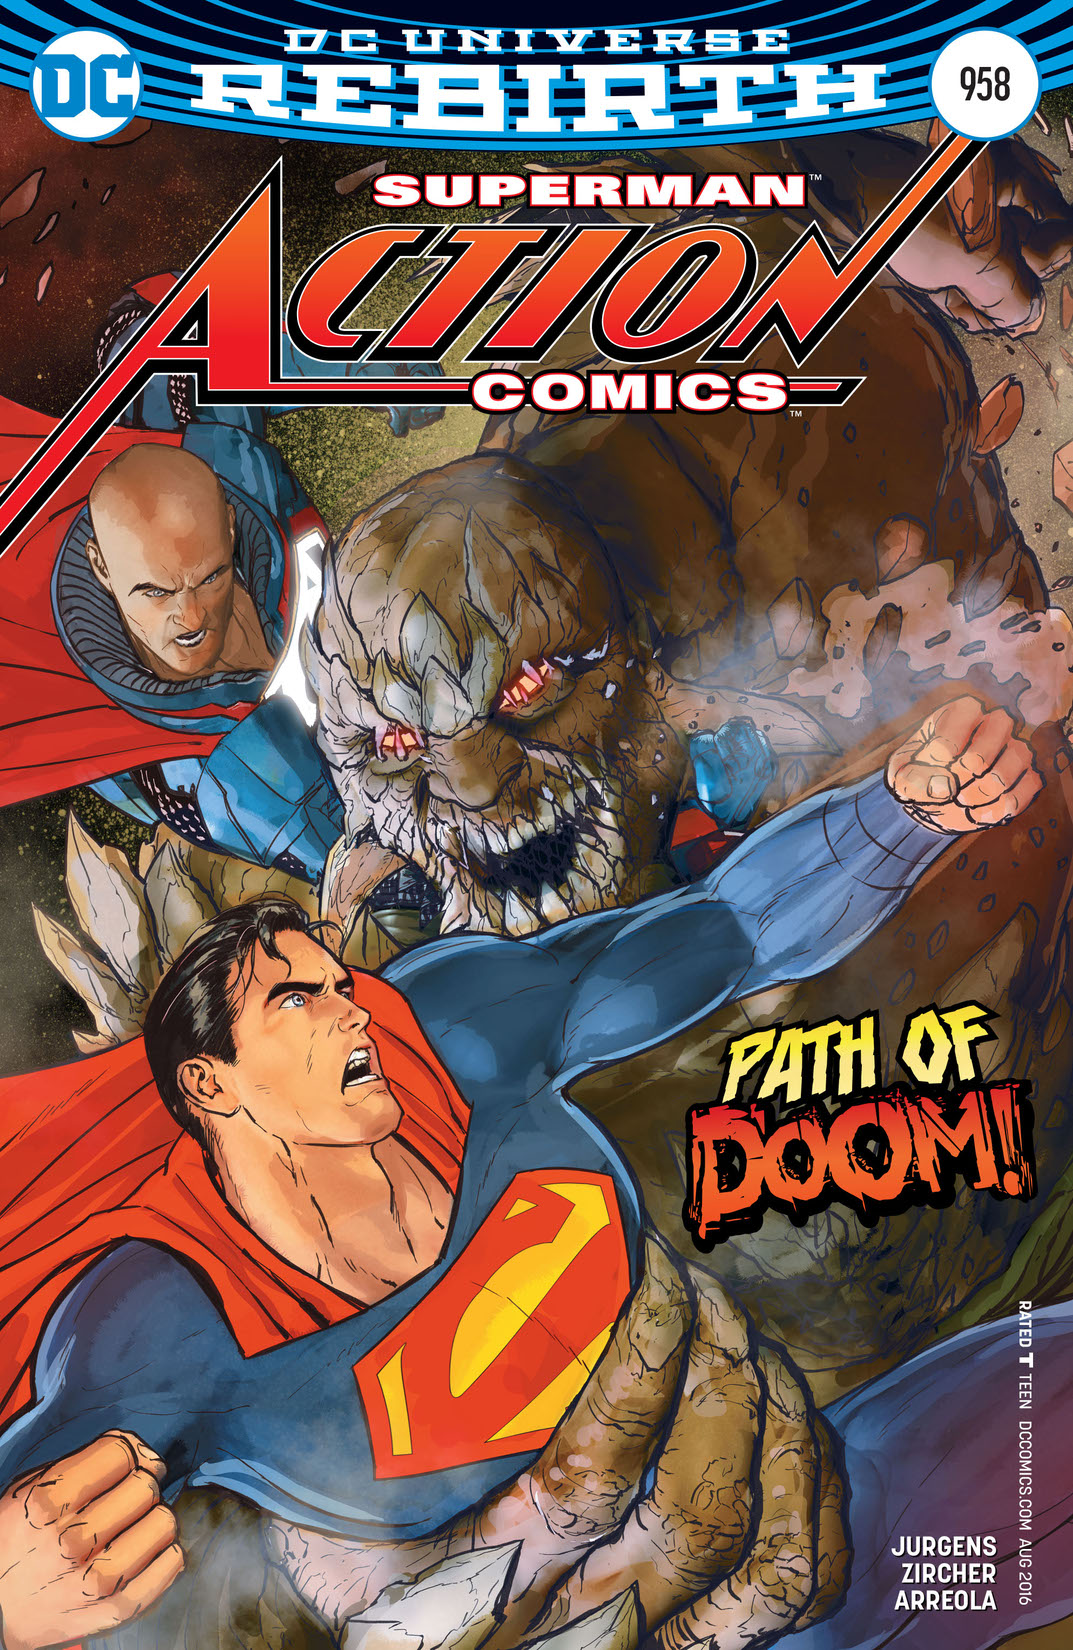 Action Comics (2016-) #958 preview images